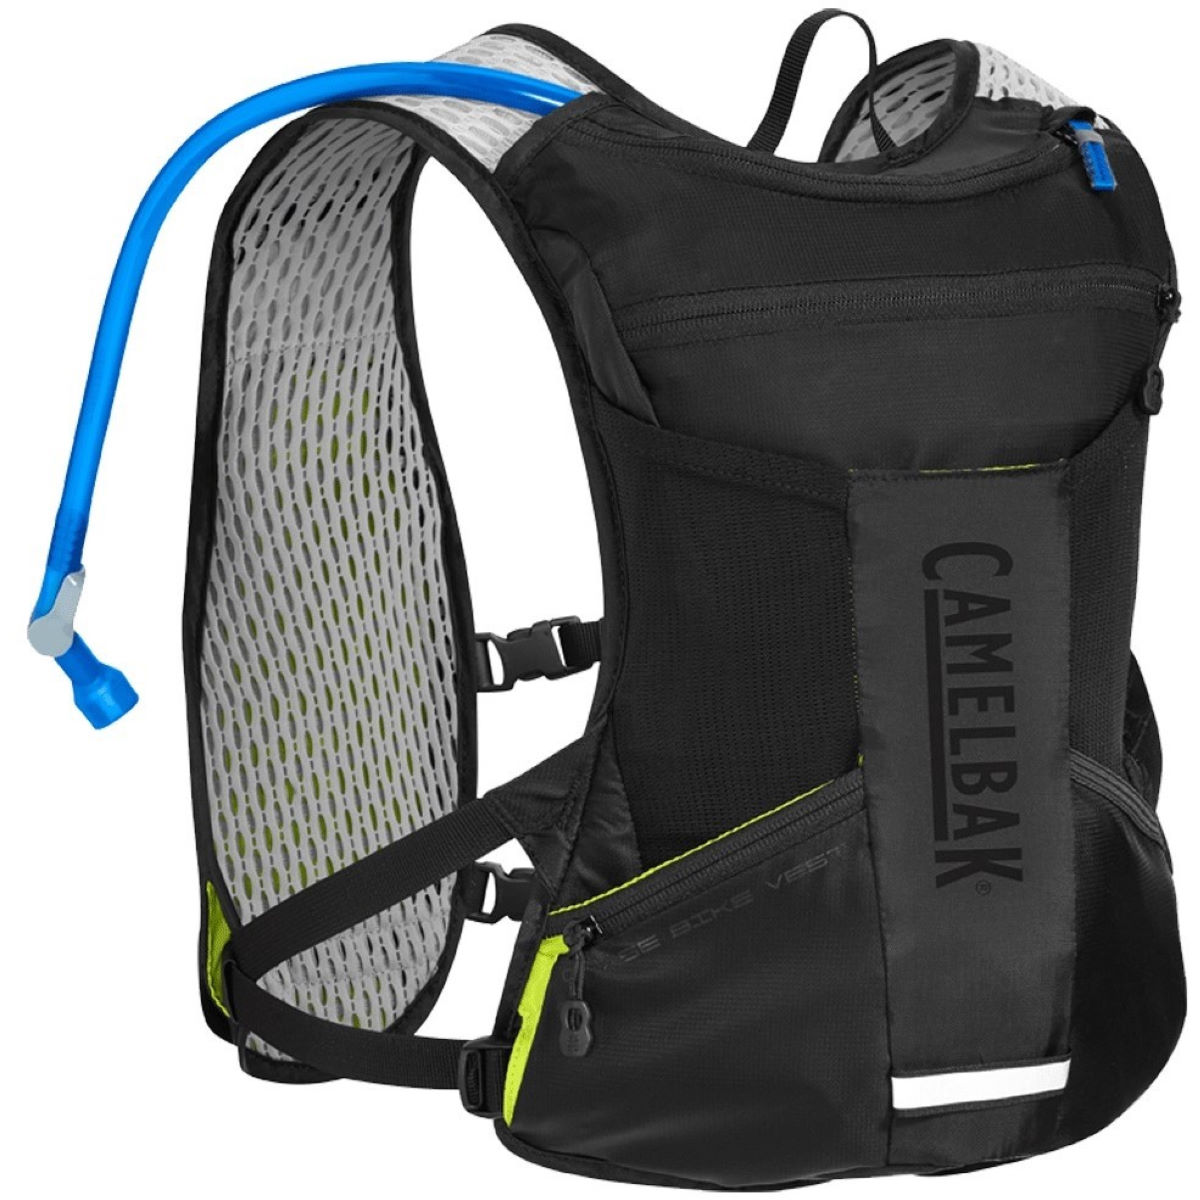 Chaleco de hidratación Camelbak Chase Bike Vest (1,5 L aprox.) - Chalecos de hidratación